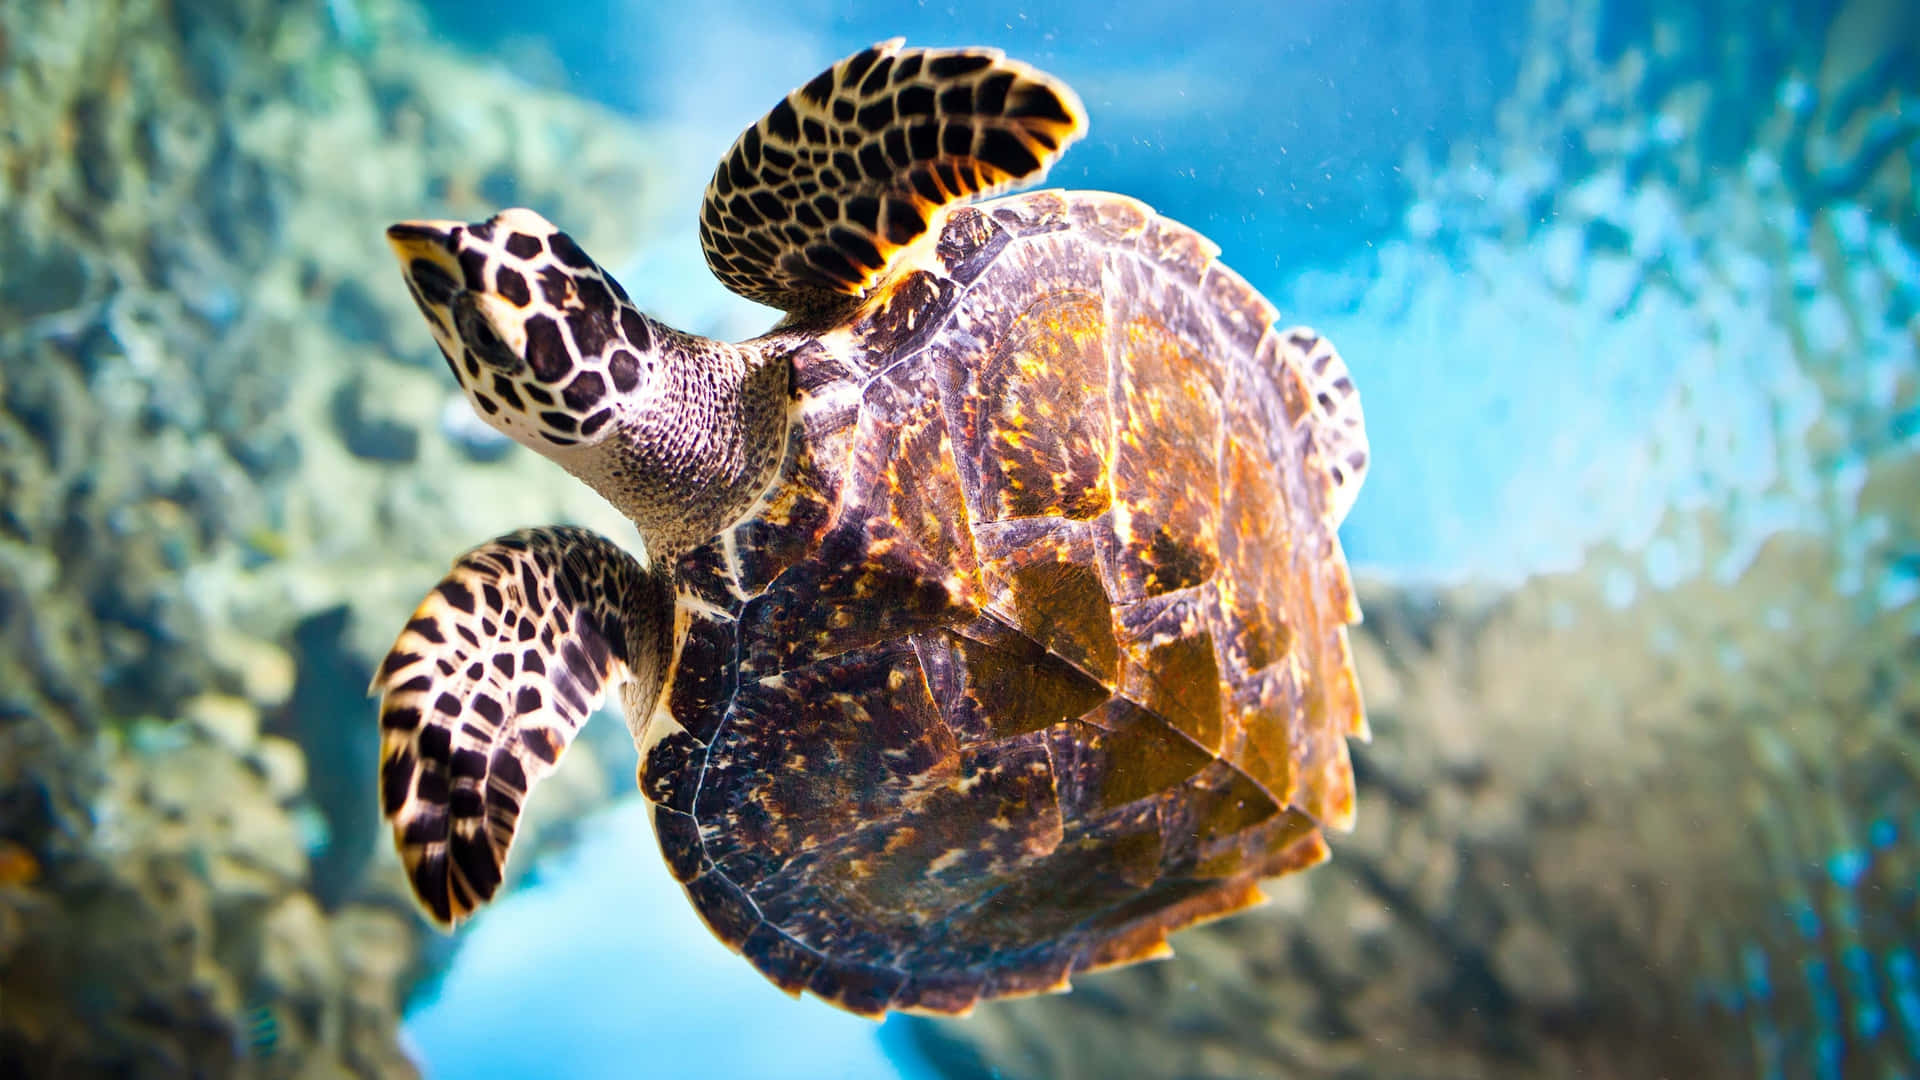 Glide Through the Sea - A sea turtle enjoys a leisurely swim in the ocean.